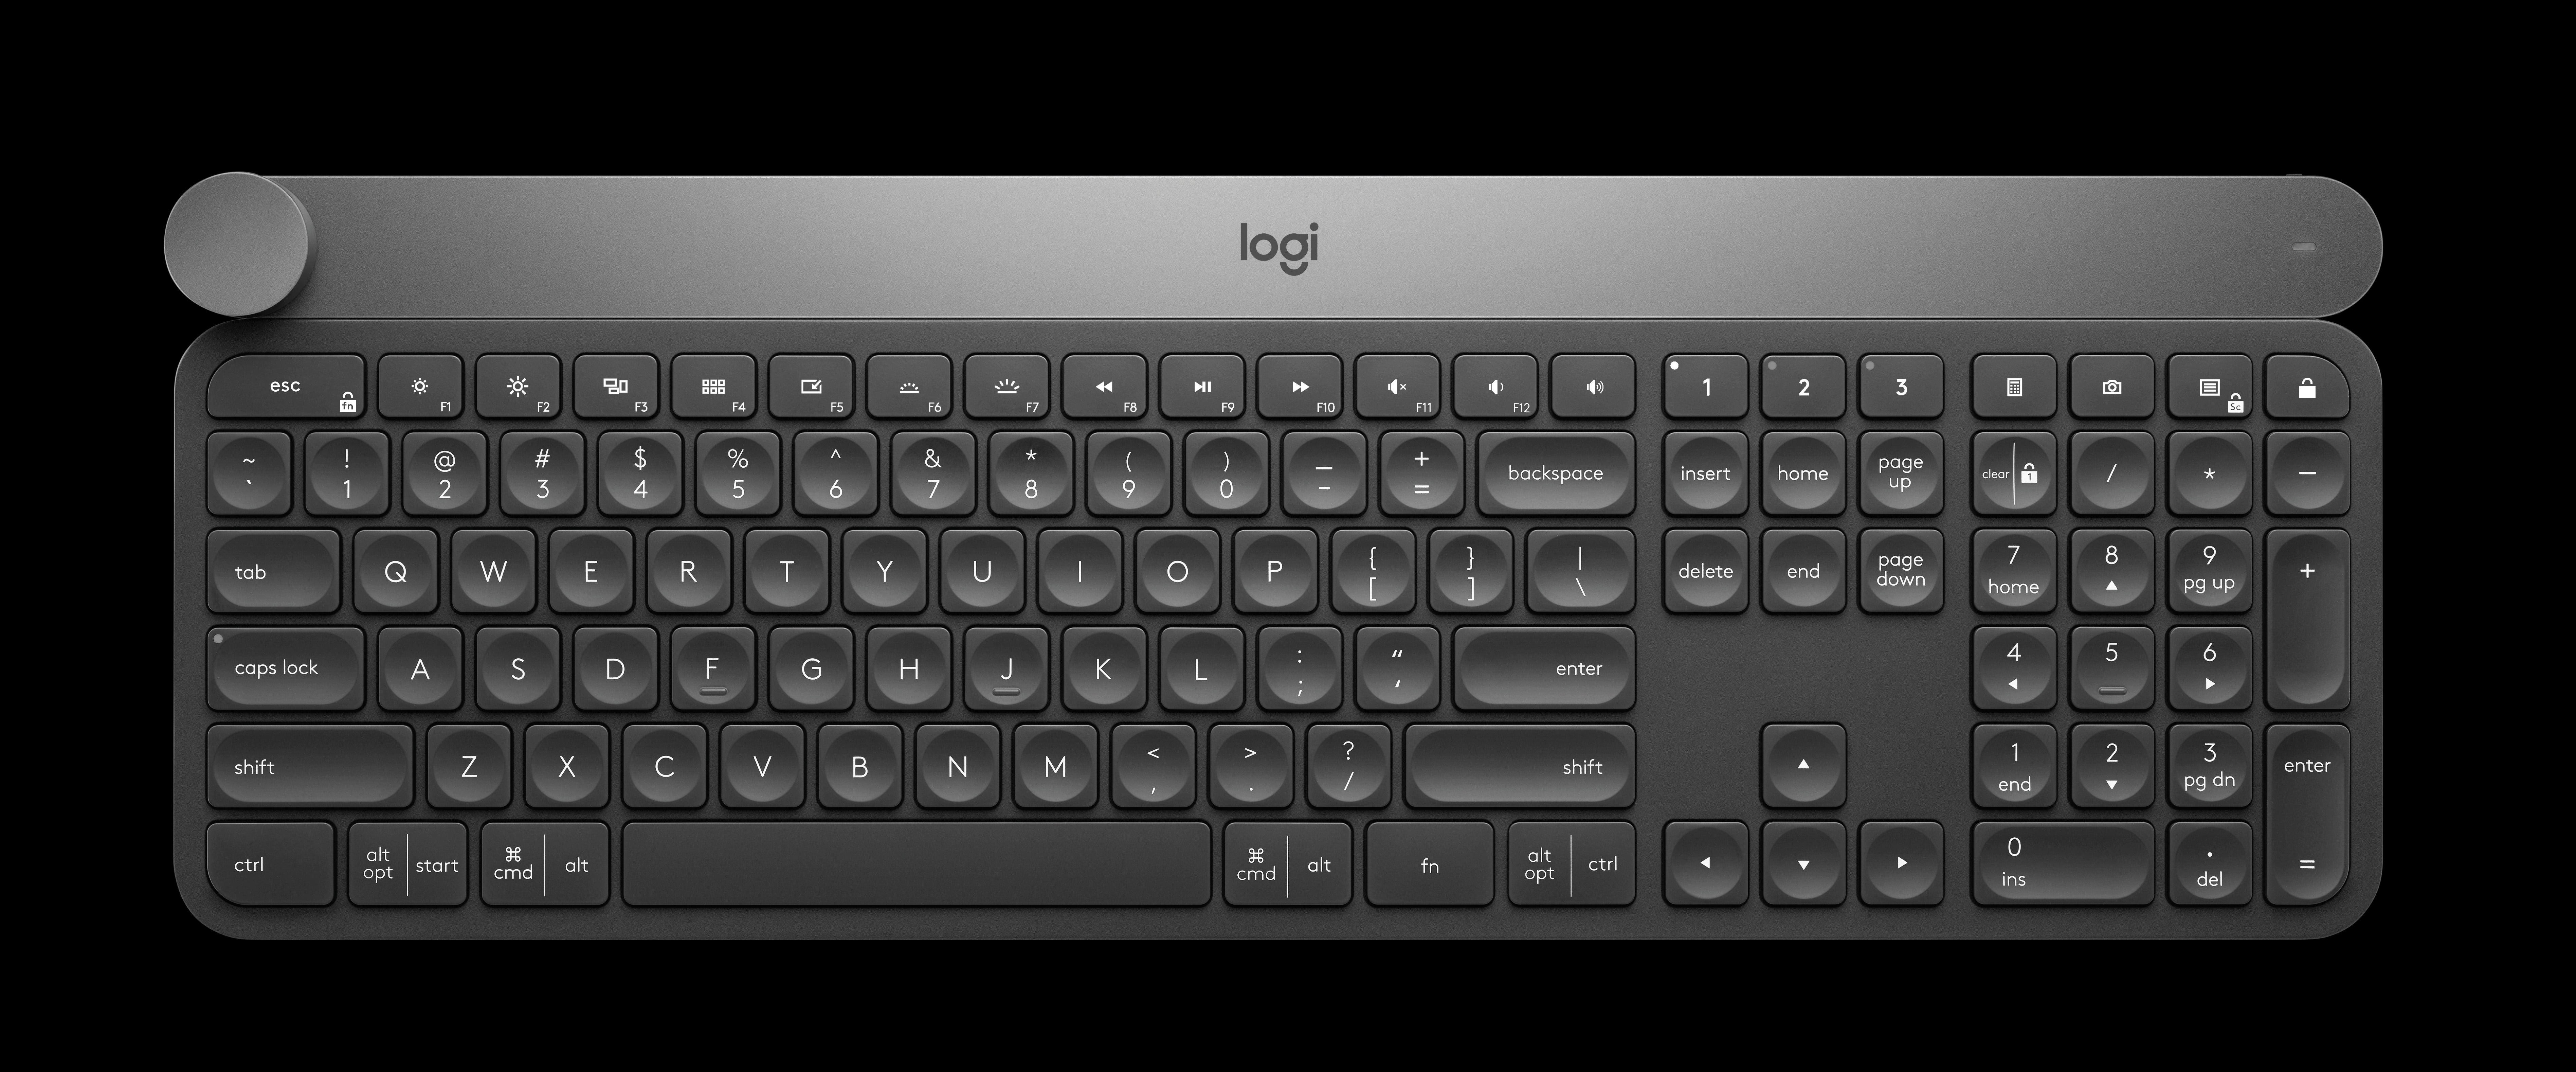 remotix change keyboard layout